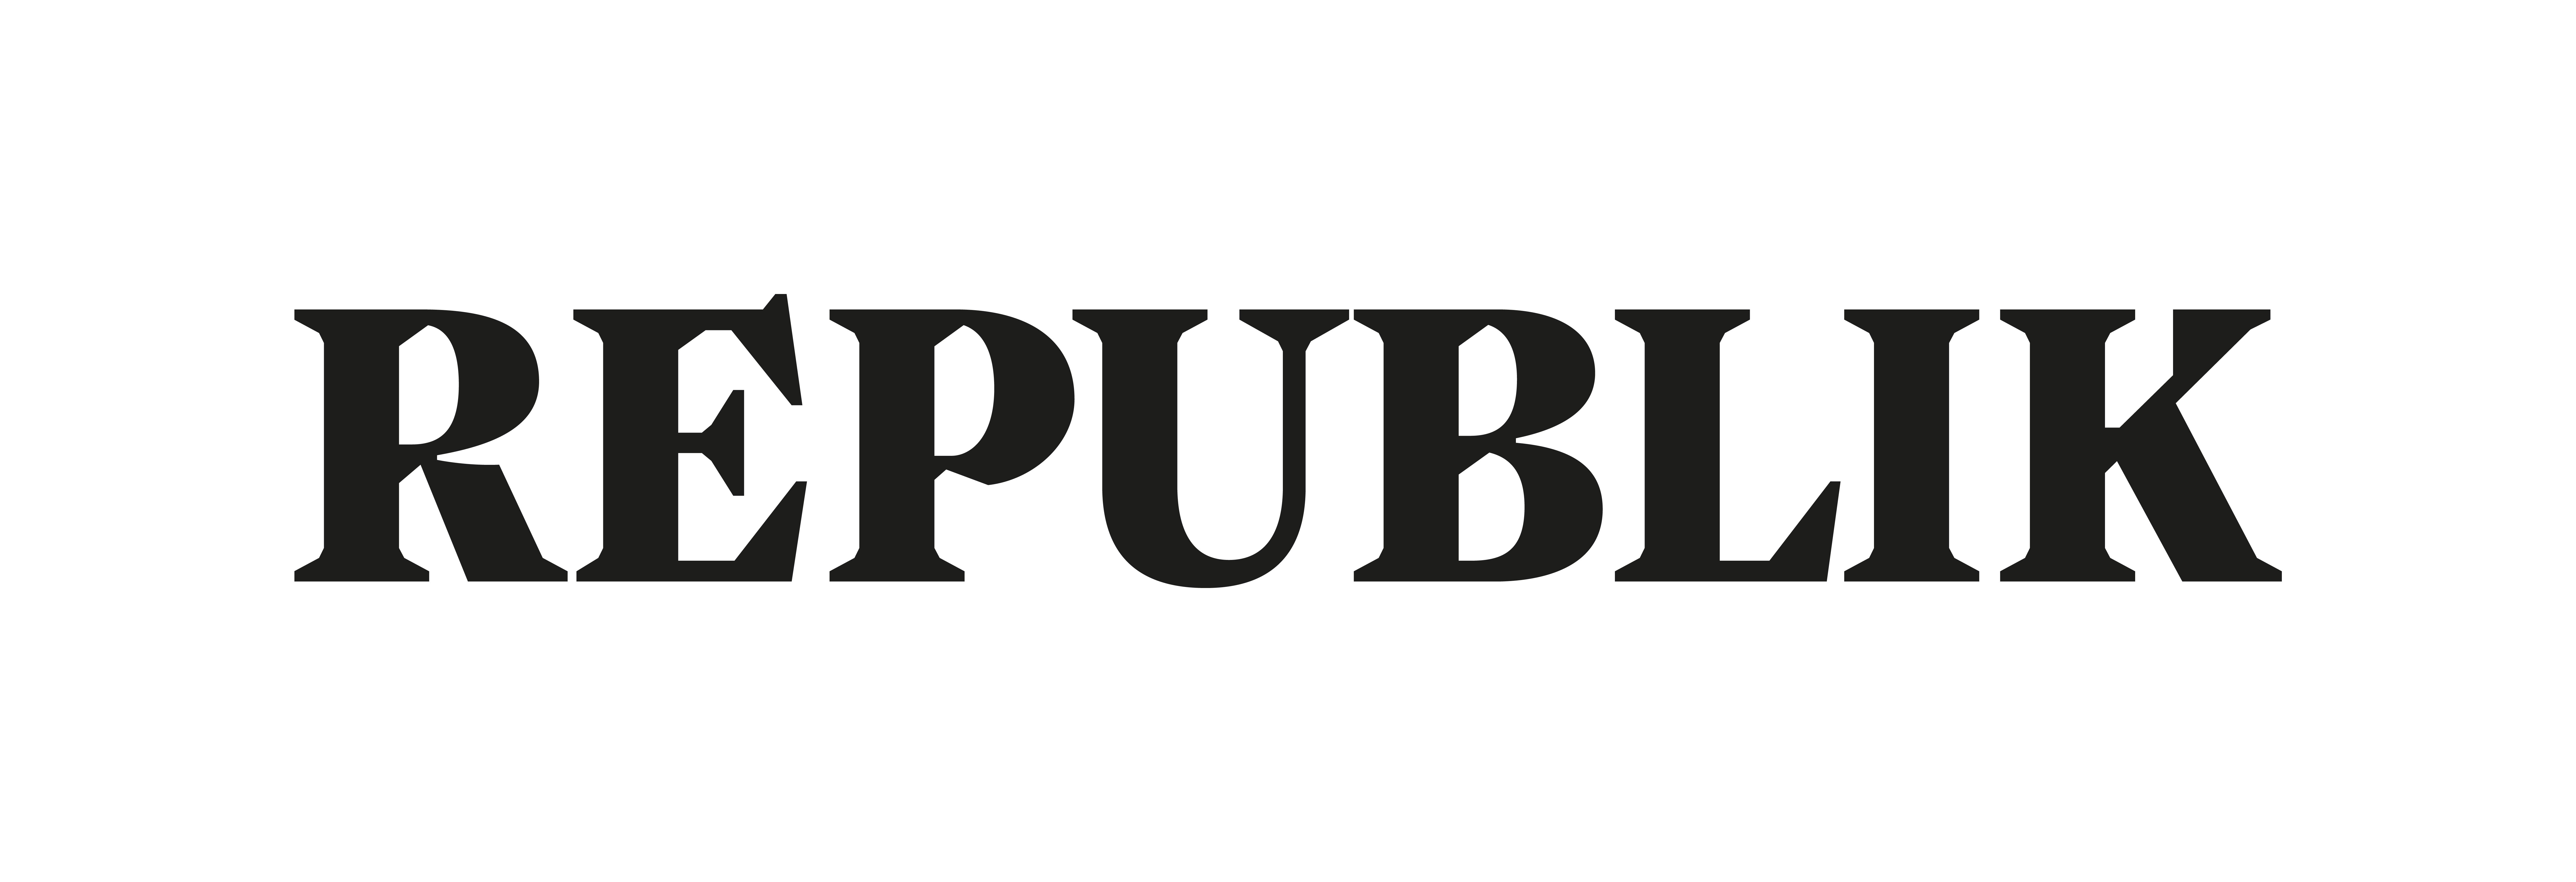 5011 republik logo